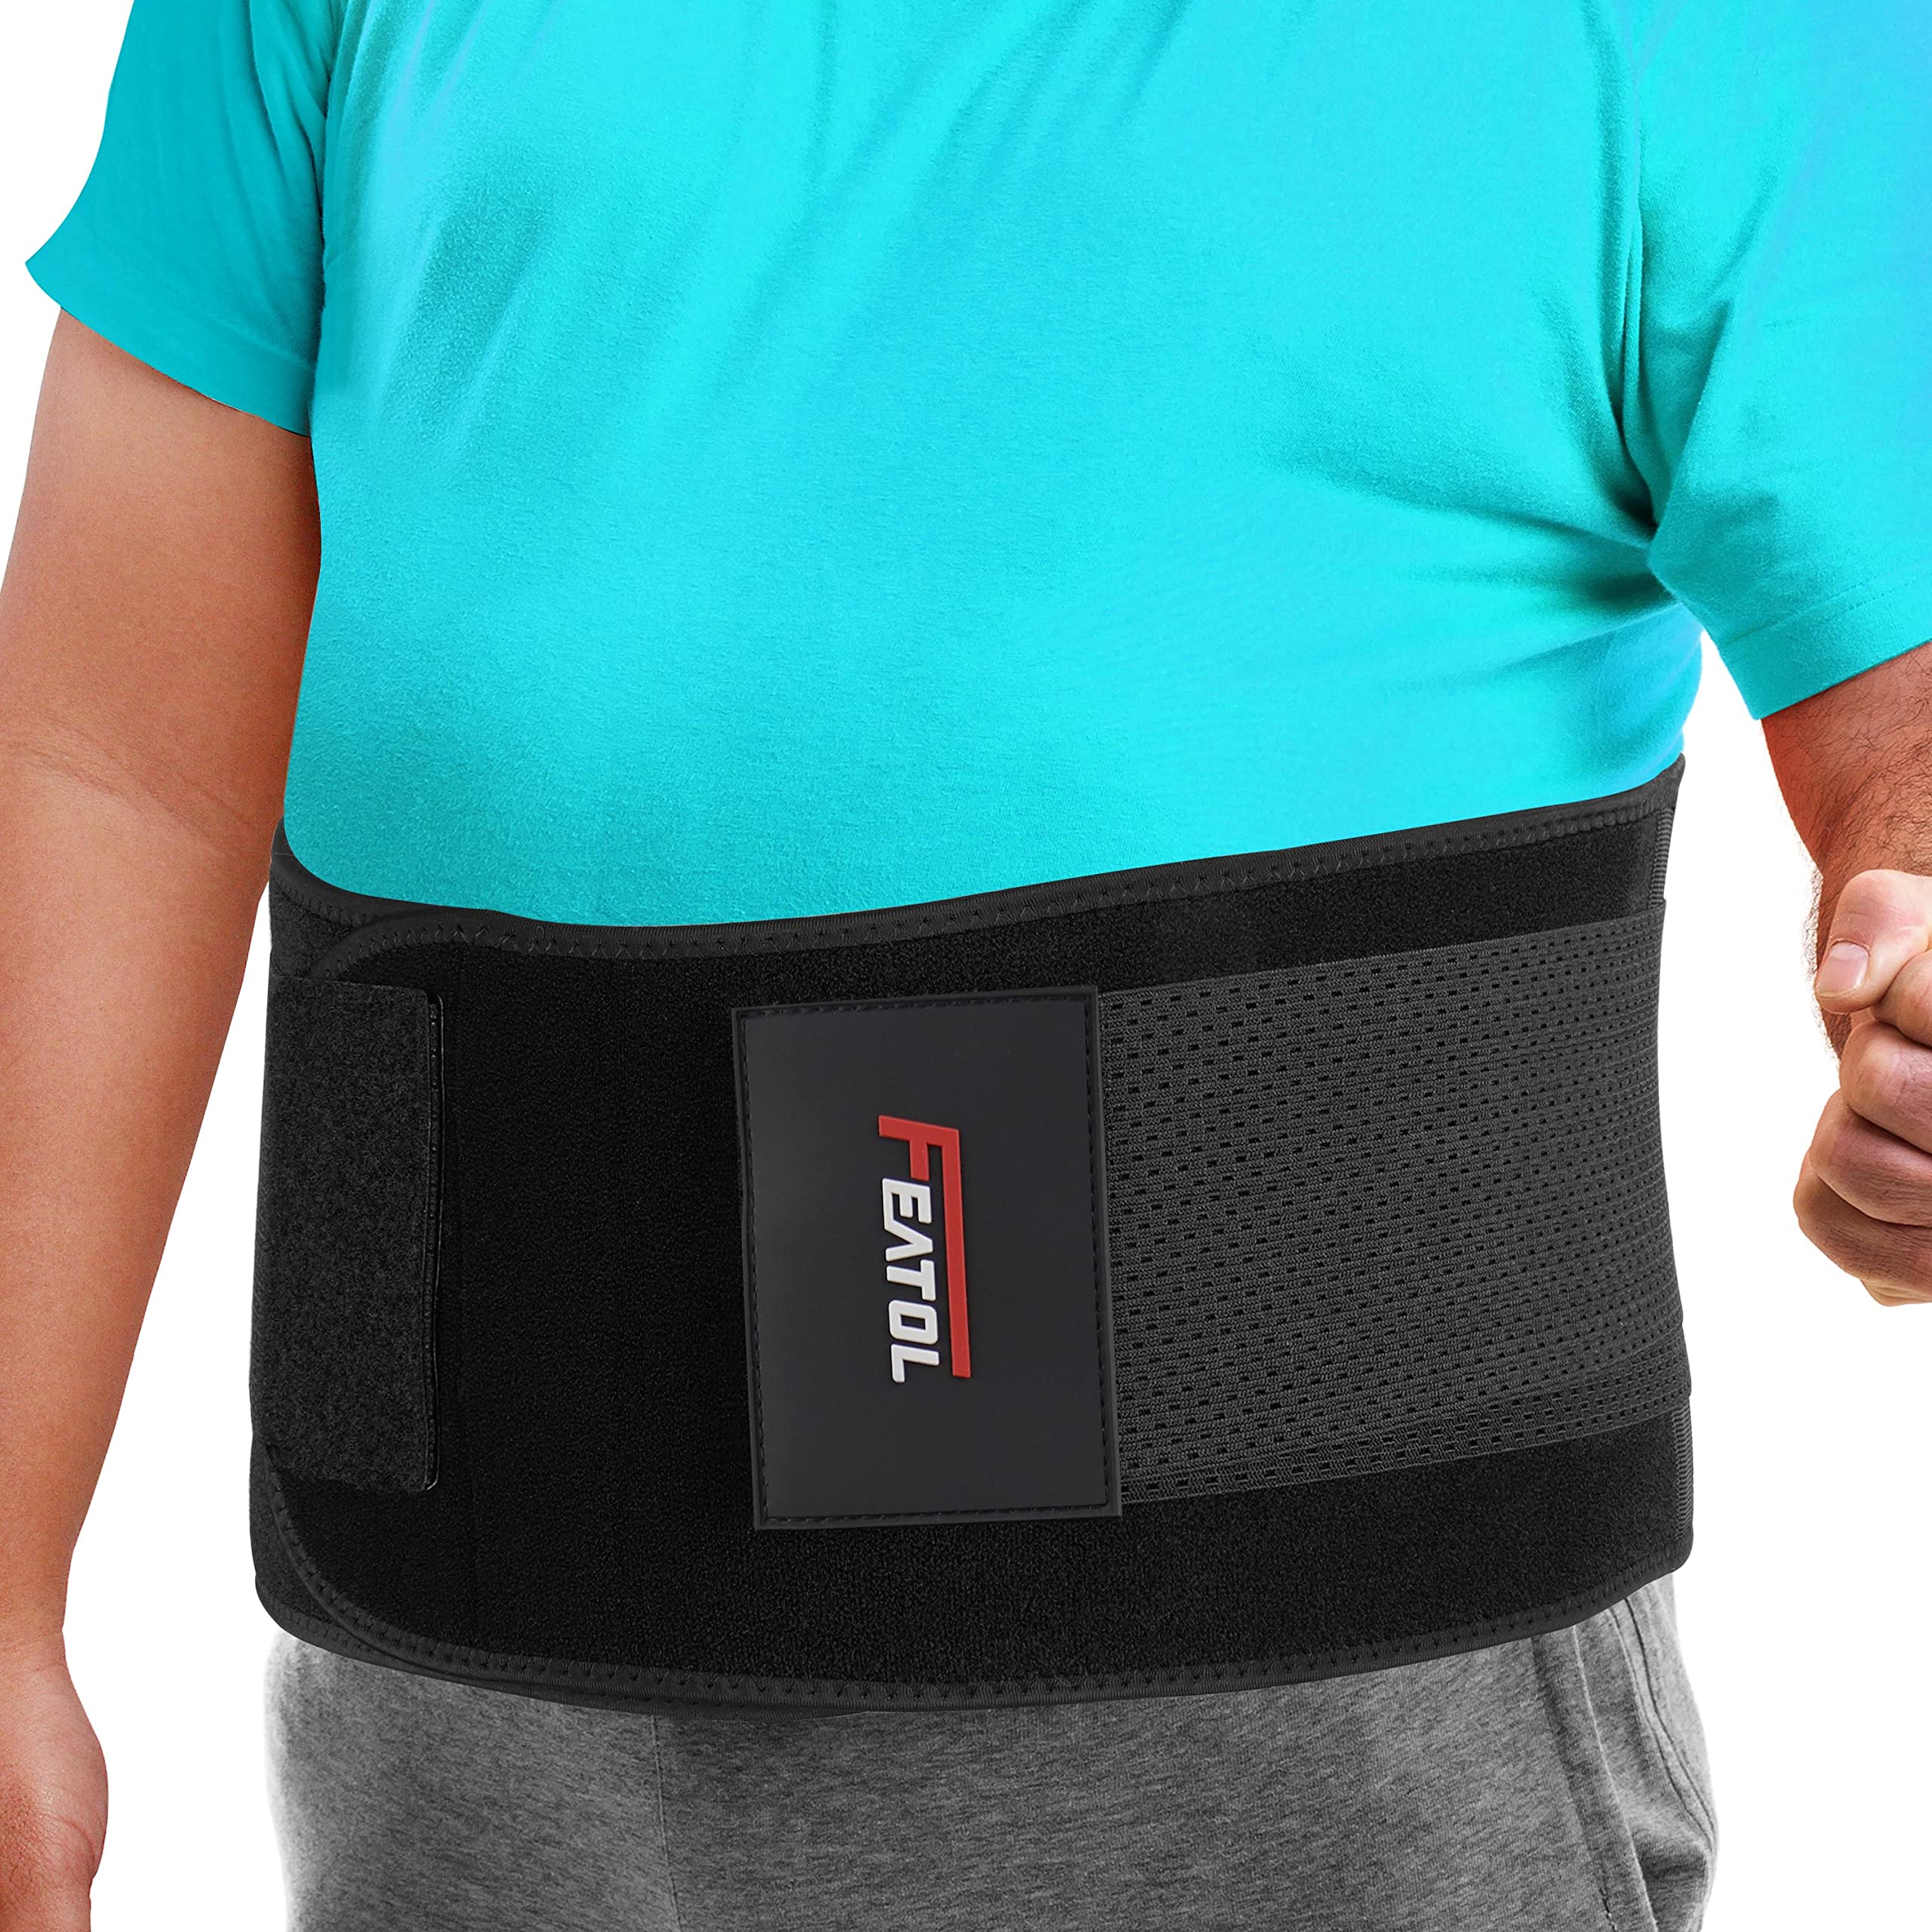 FEATOL Back Brace for Lower Back Pain （Large Size/X large Size）+